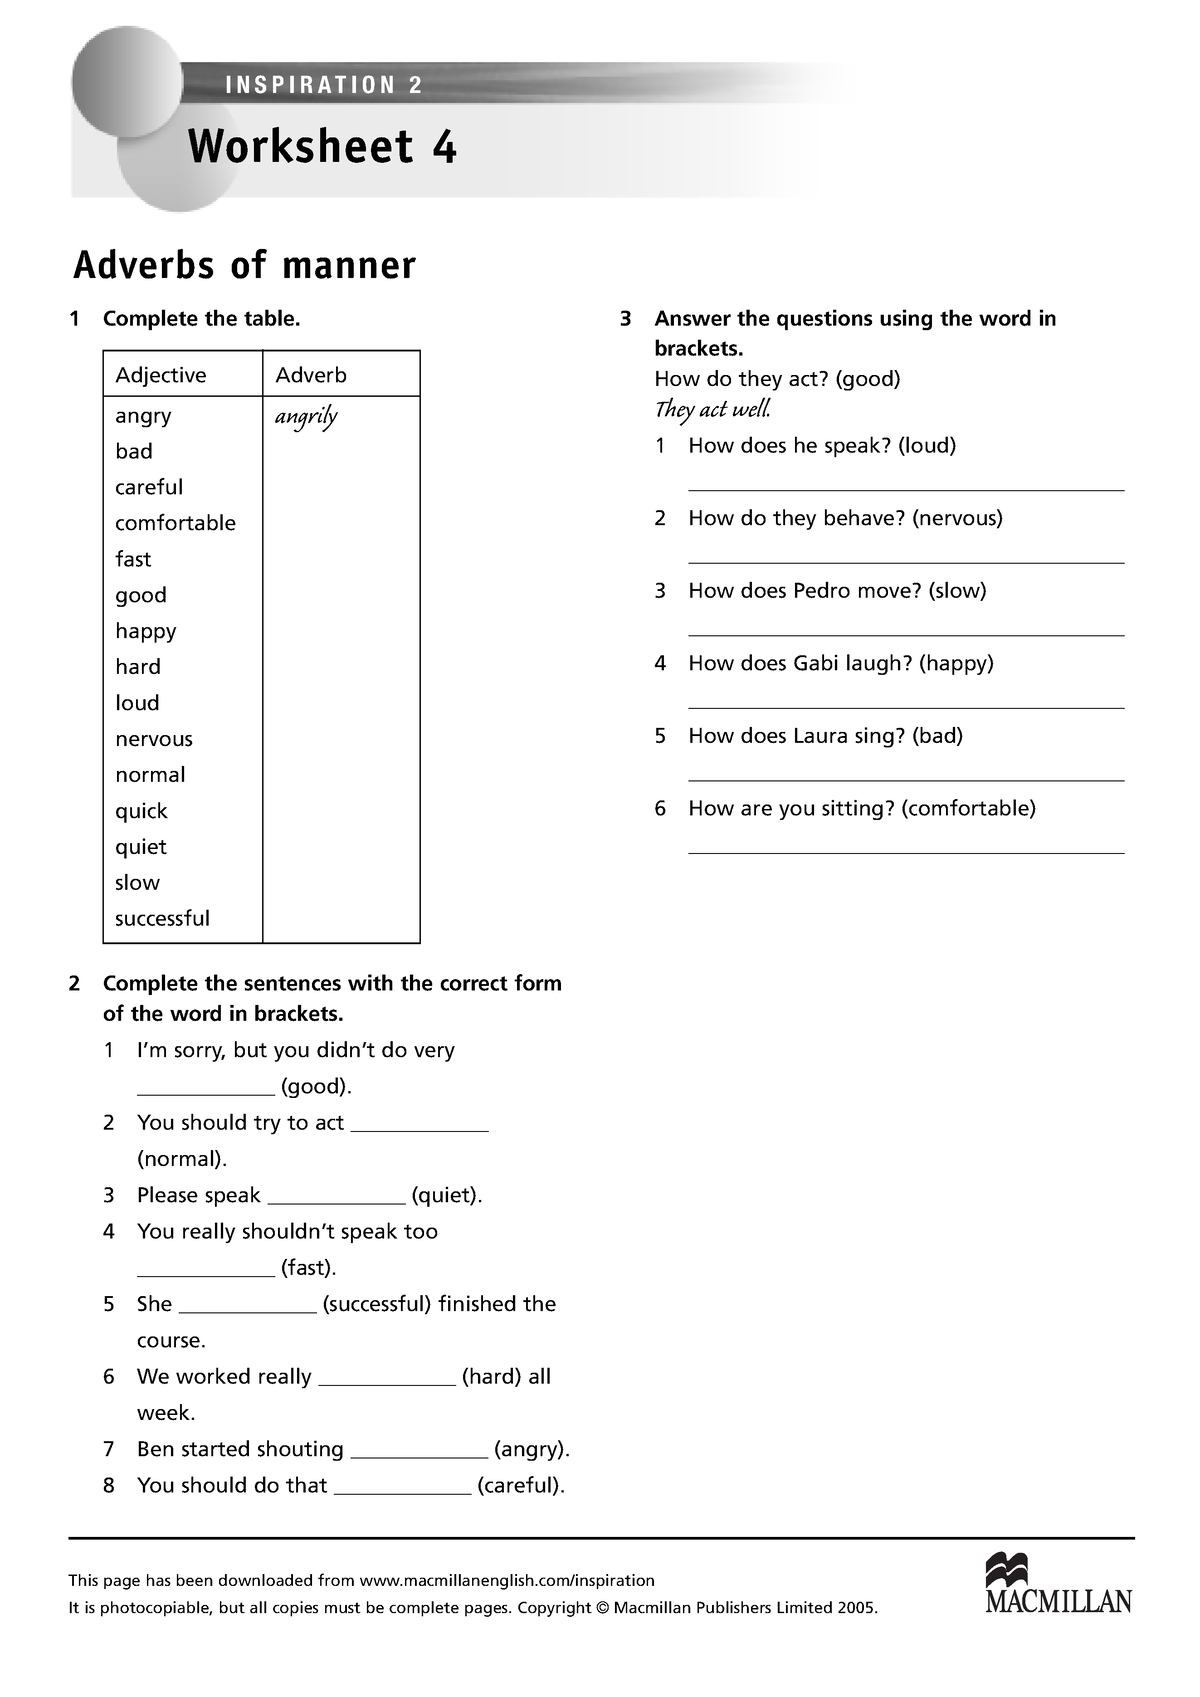 Adverbs упражнения. Adverbs of manner Worksheets. Adverb or adjective упражнения. Adverbs of manner speaking. Adverbs of manner упражнения.